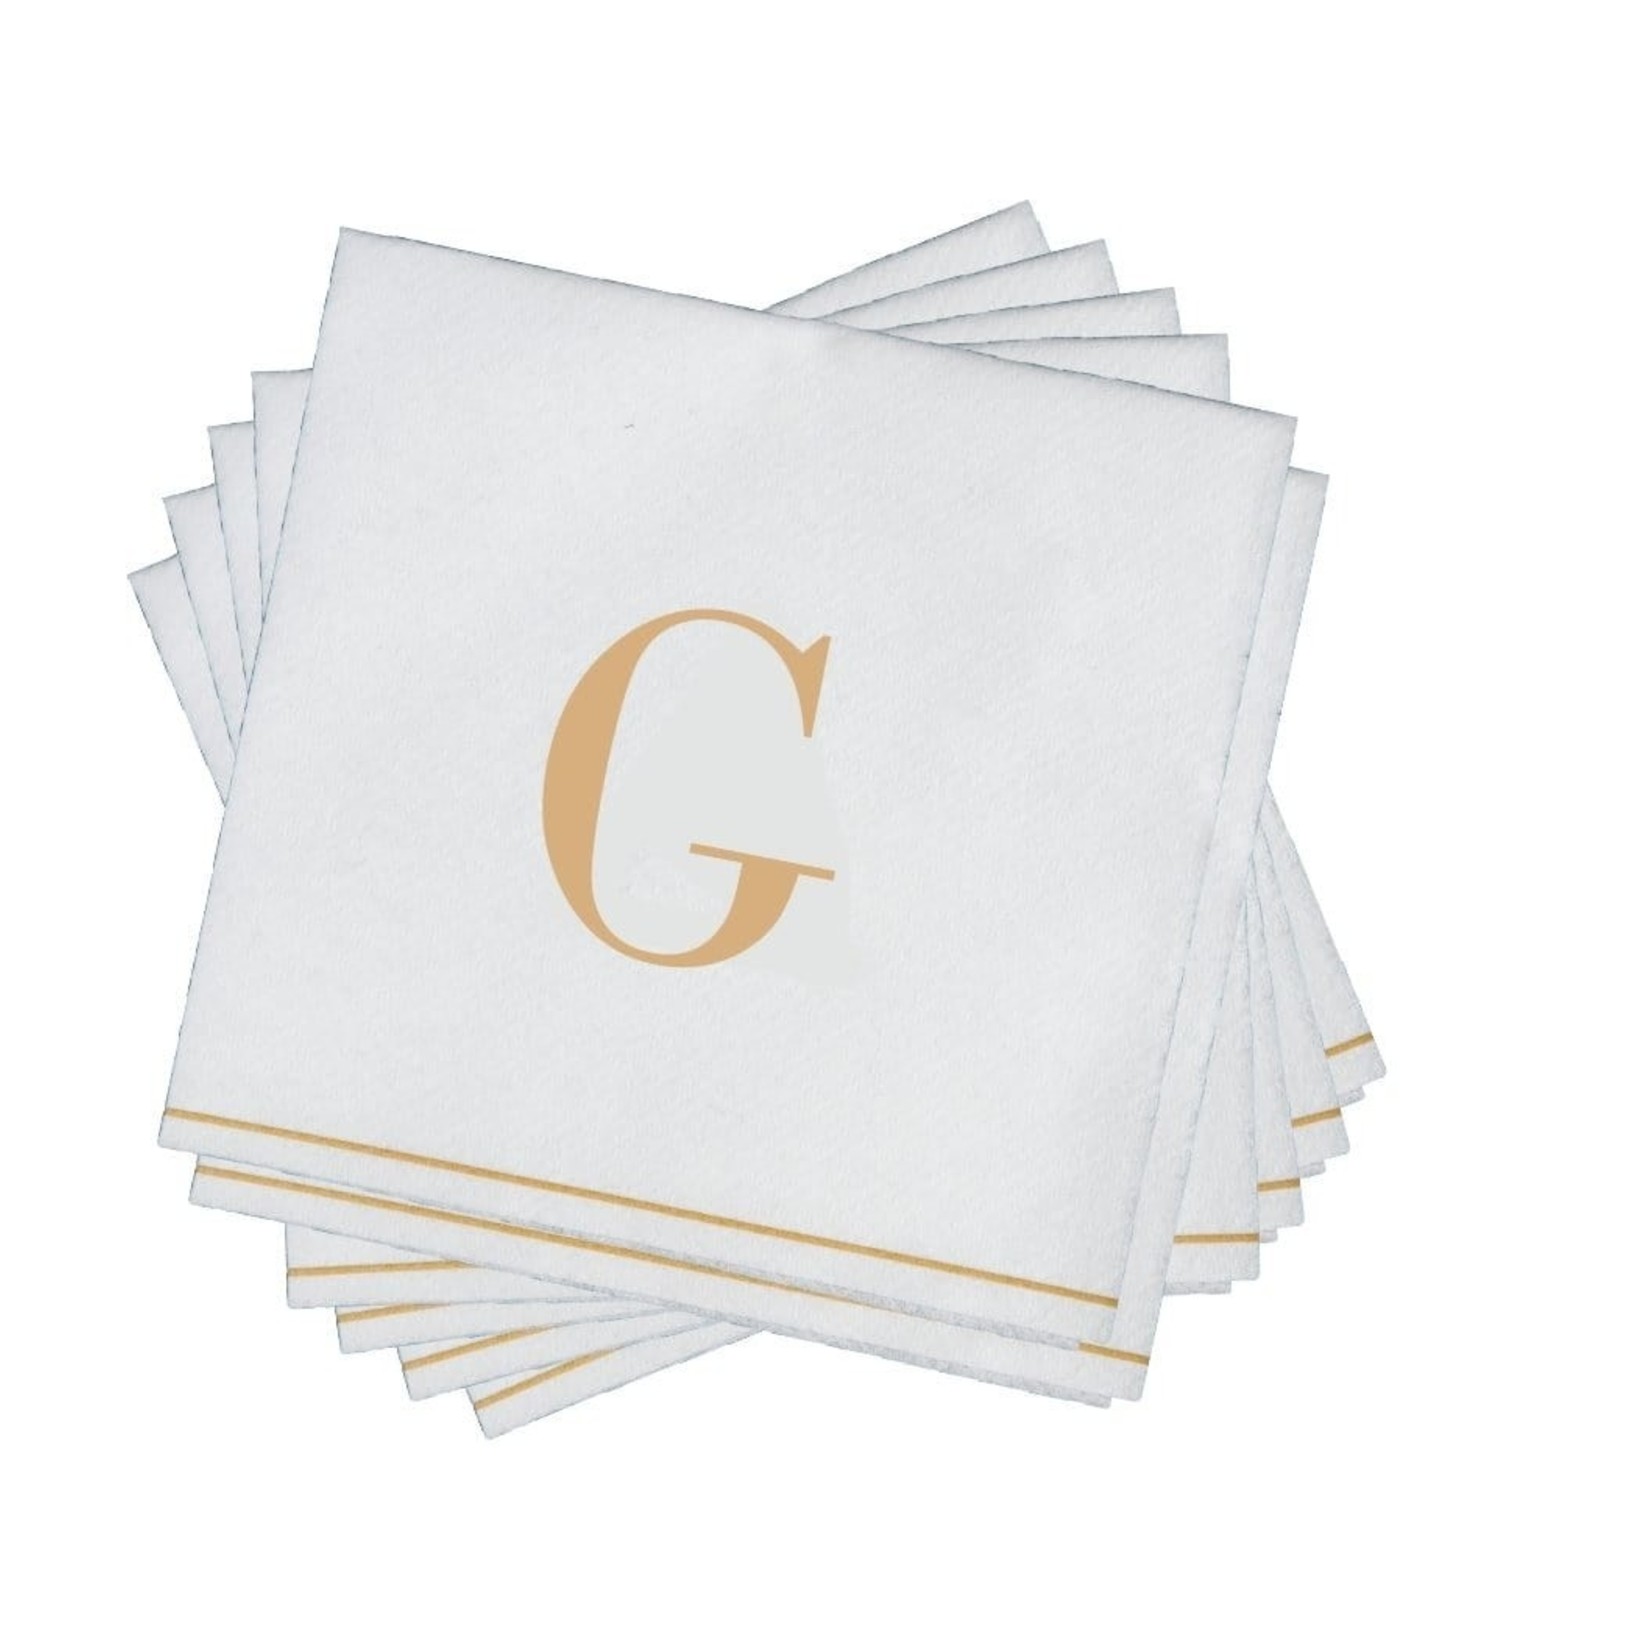 TWS 16 PK White and Gold Cocktail Paper Napkins  - Letter G